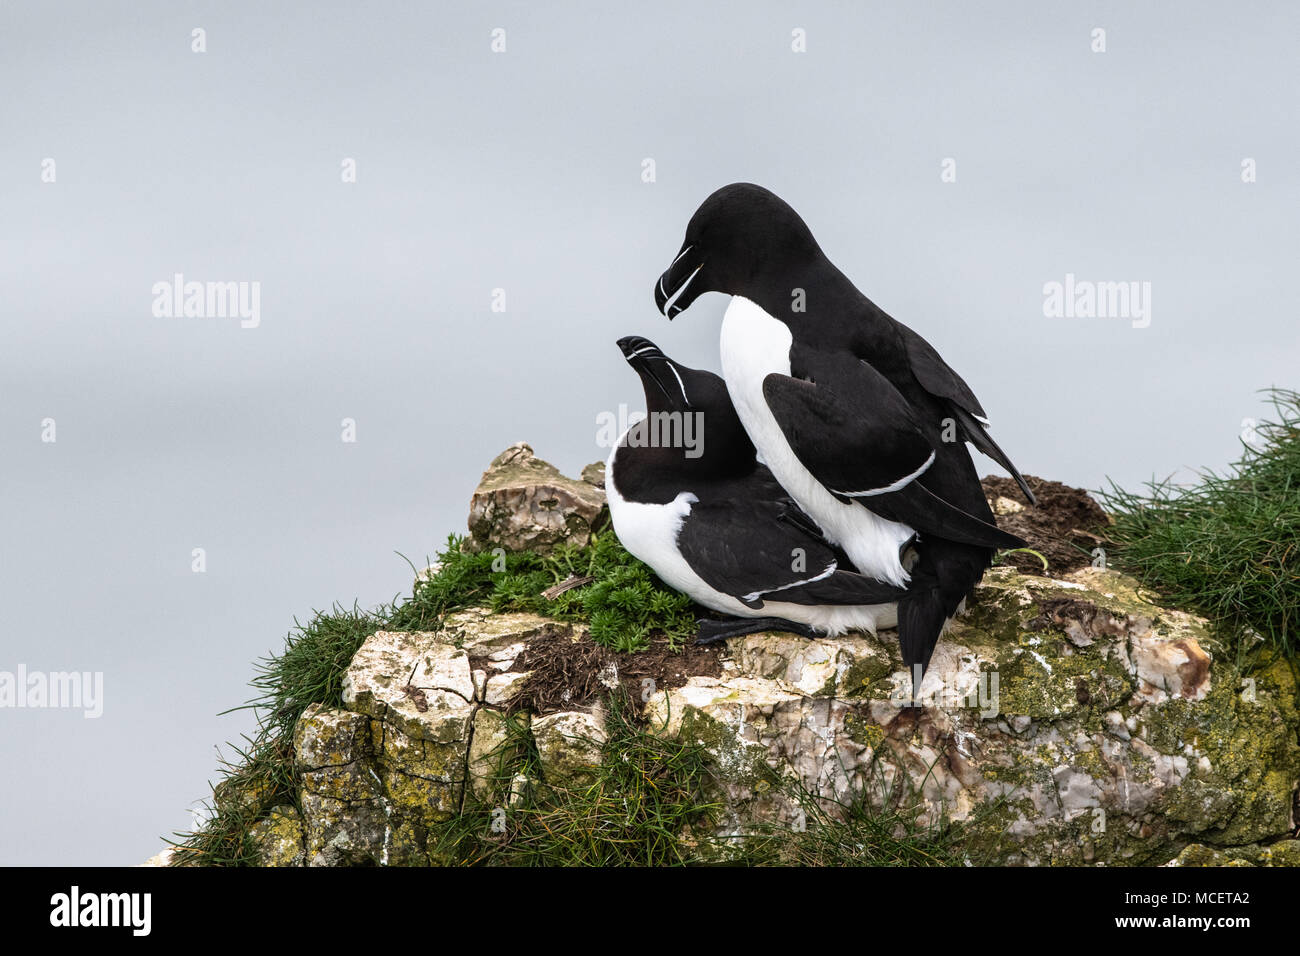 Mating of two razorbill birds on cliff edge Stock Photo